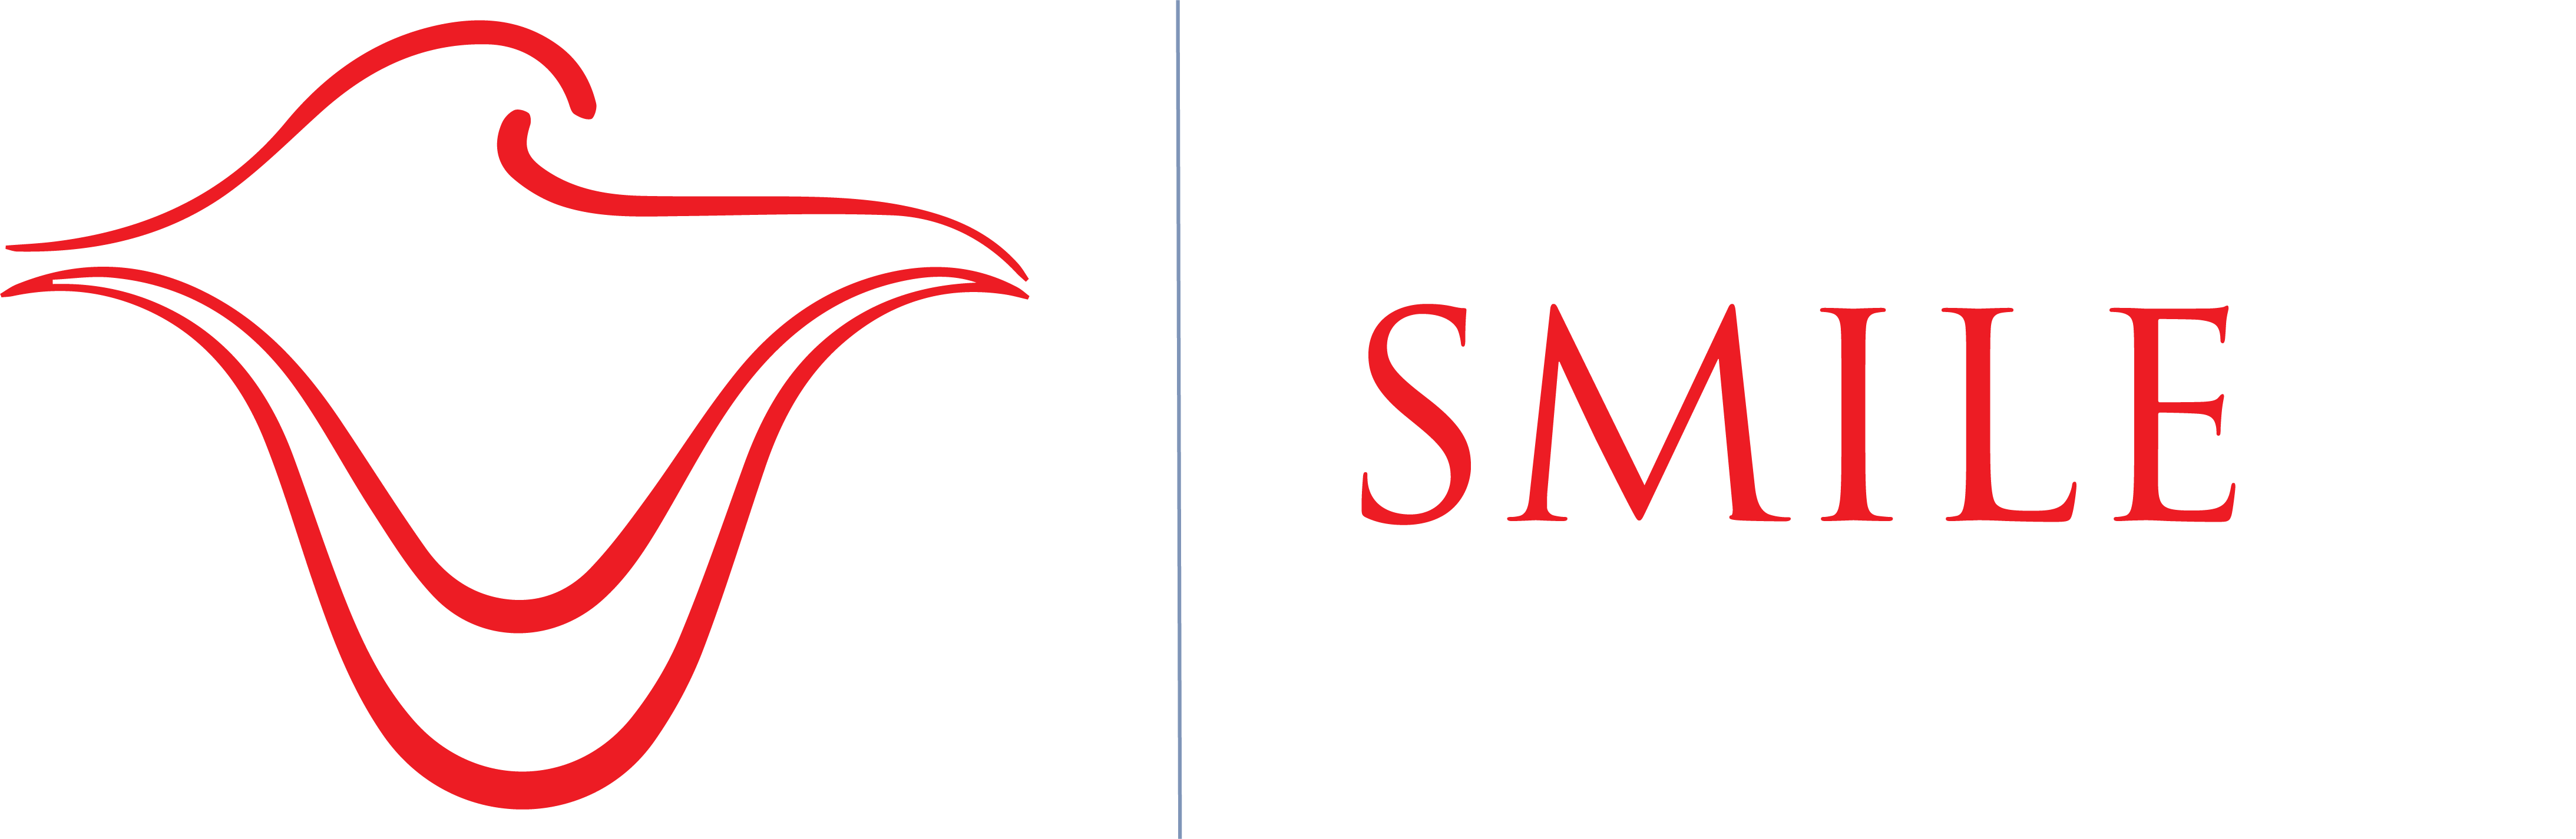 Brite-Smile-Logo-Original-White-2020